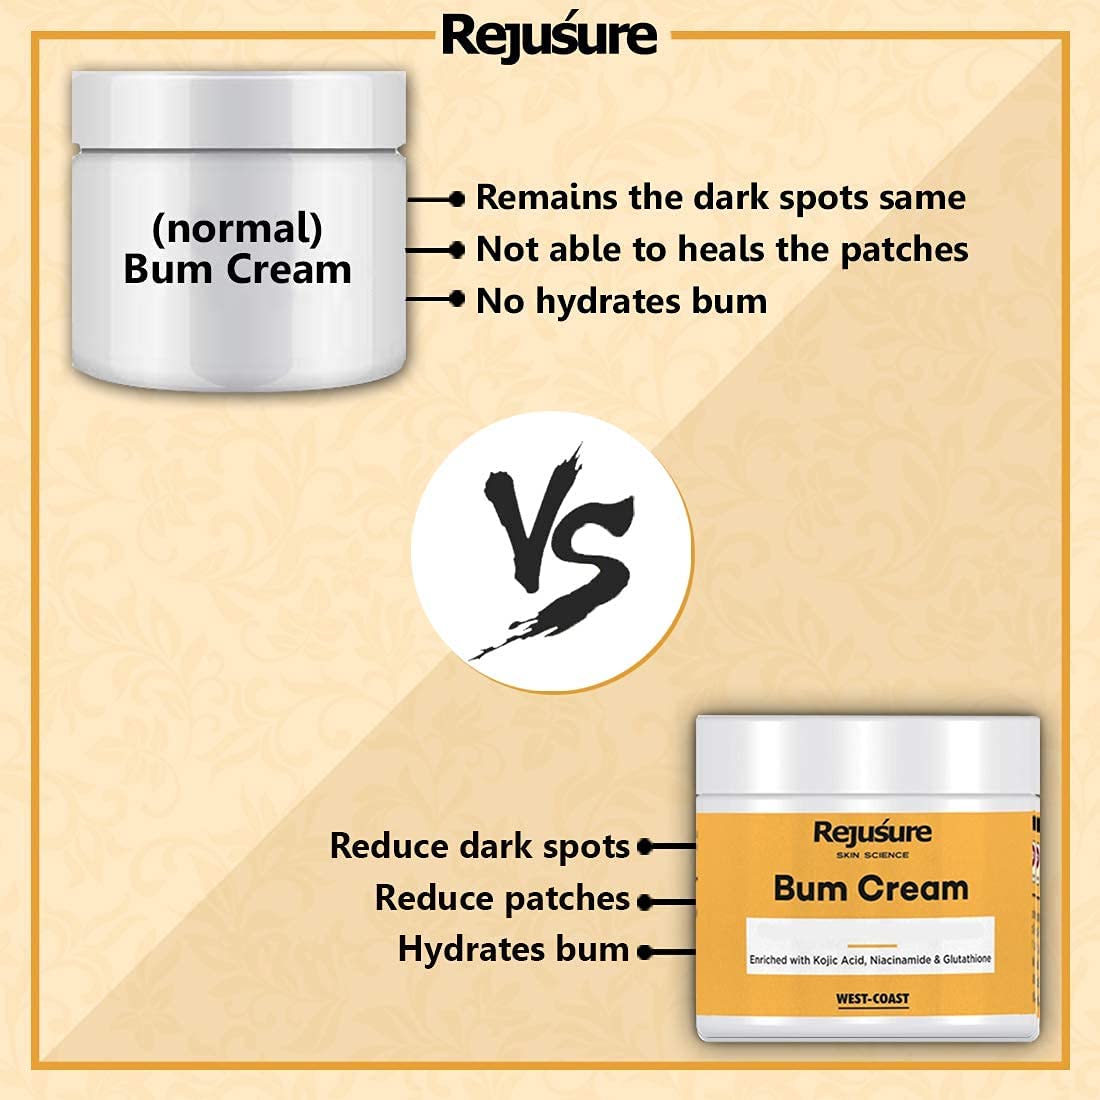 Rejusure Bum Cream with Glutathione, Niacinamide & Kojic Acid- 50gm (Pack of 3)